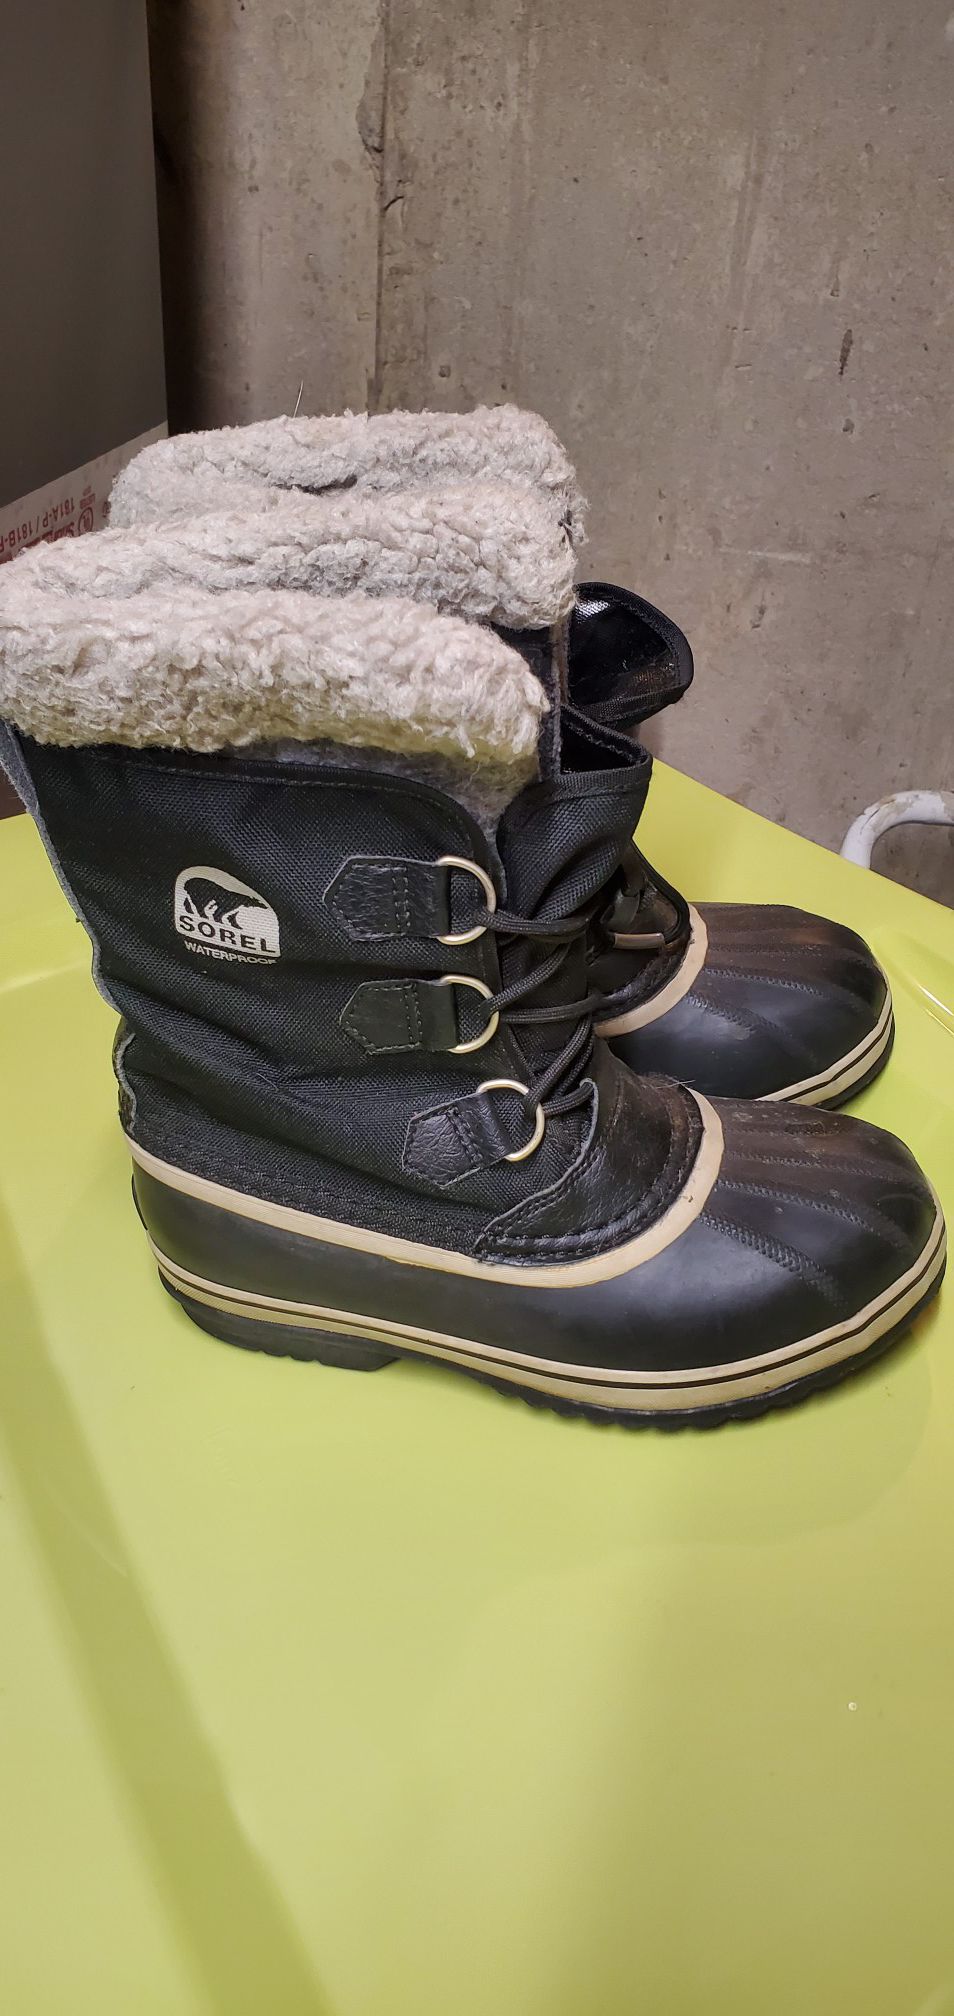 Kids Sorel snow boots size 5